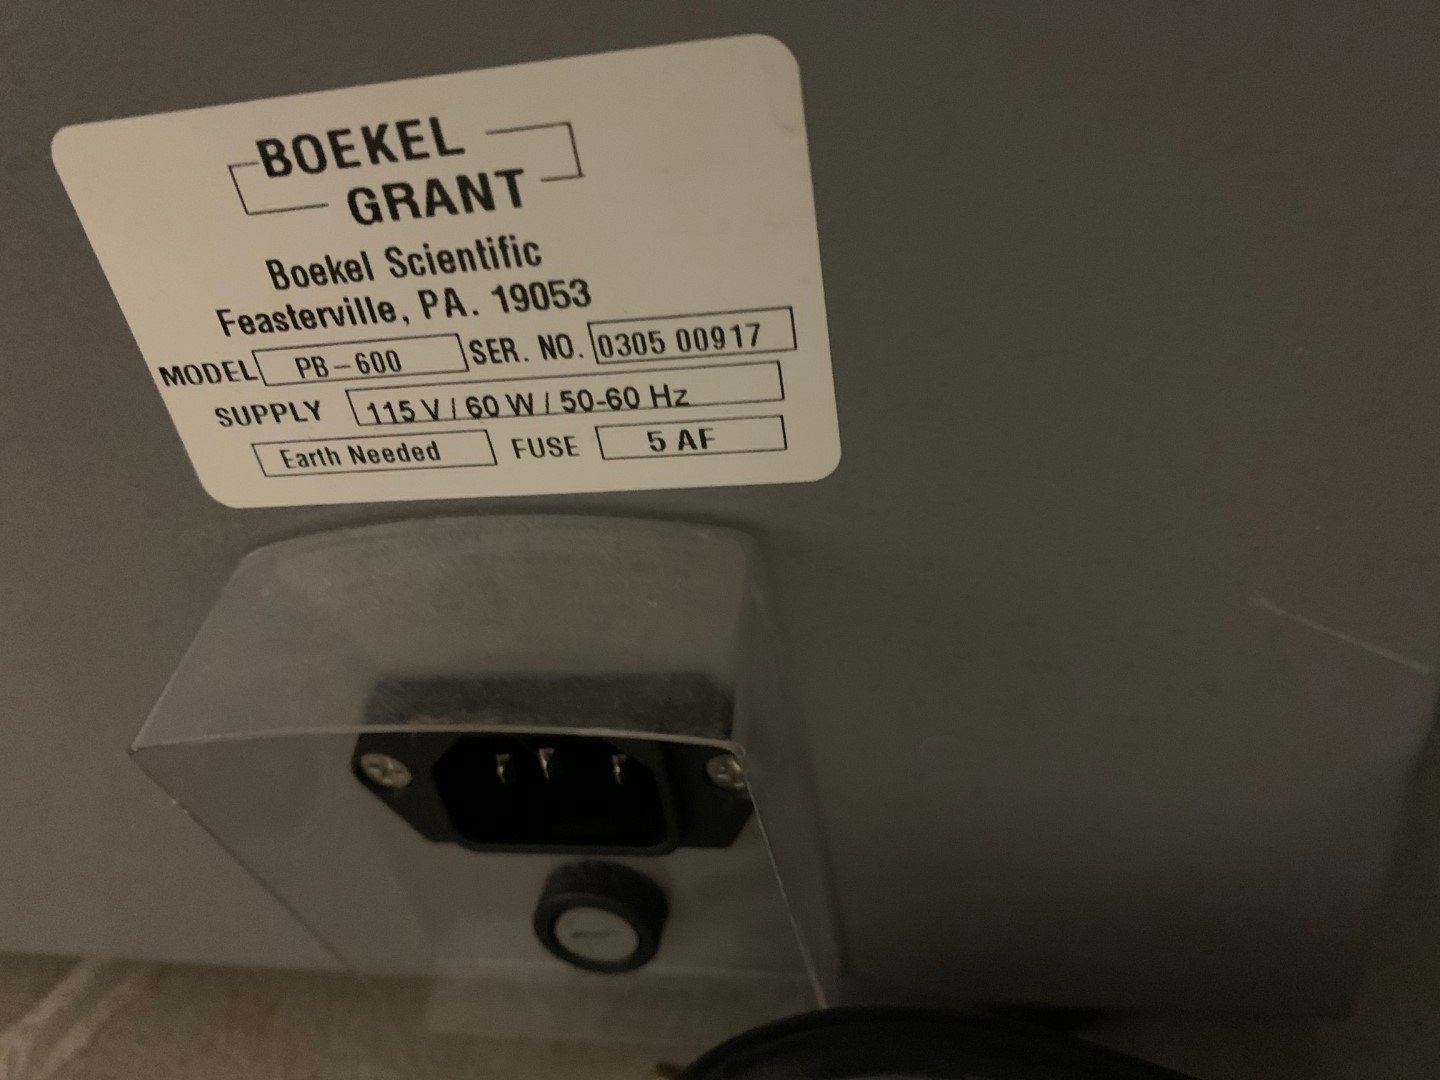 Boekel Grant PB-60 Digital Water Bath